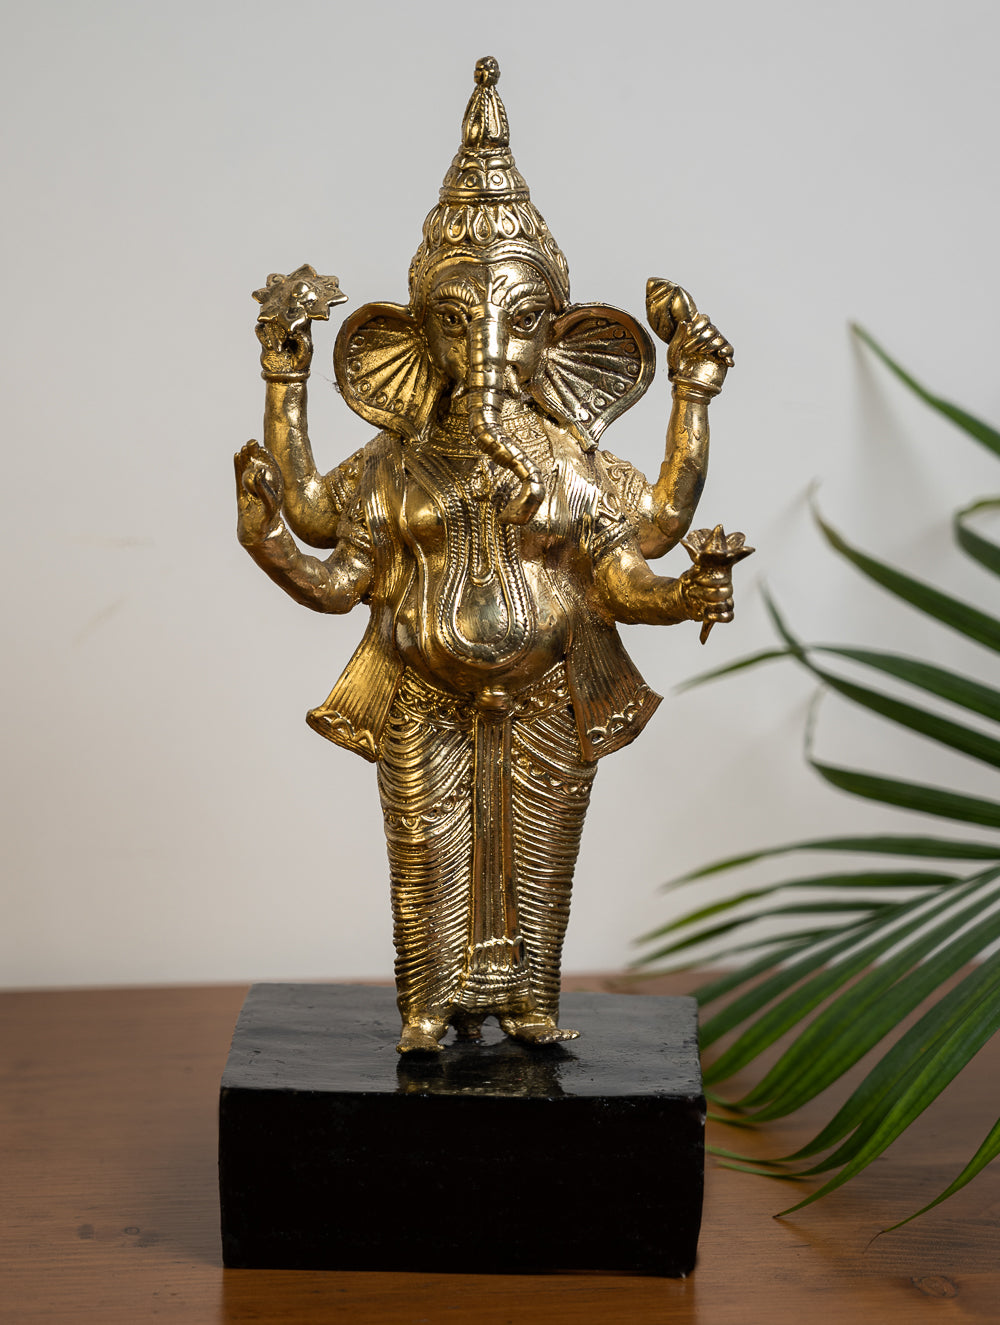 Load image into Gallery viewer, Dhokra Metal Craft Curio - Ganesha